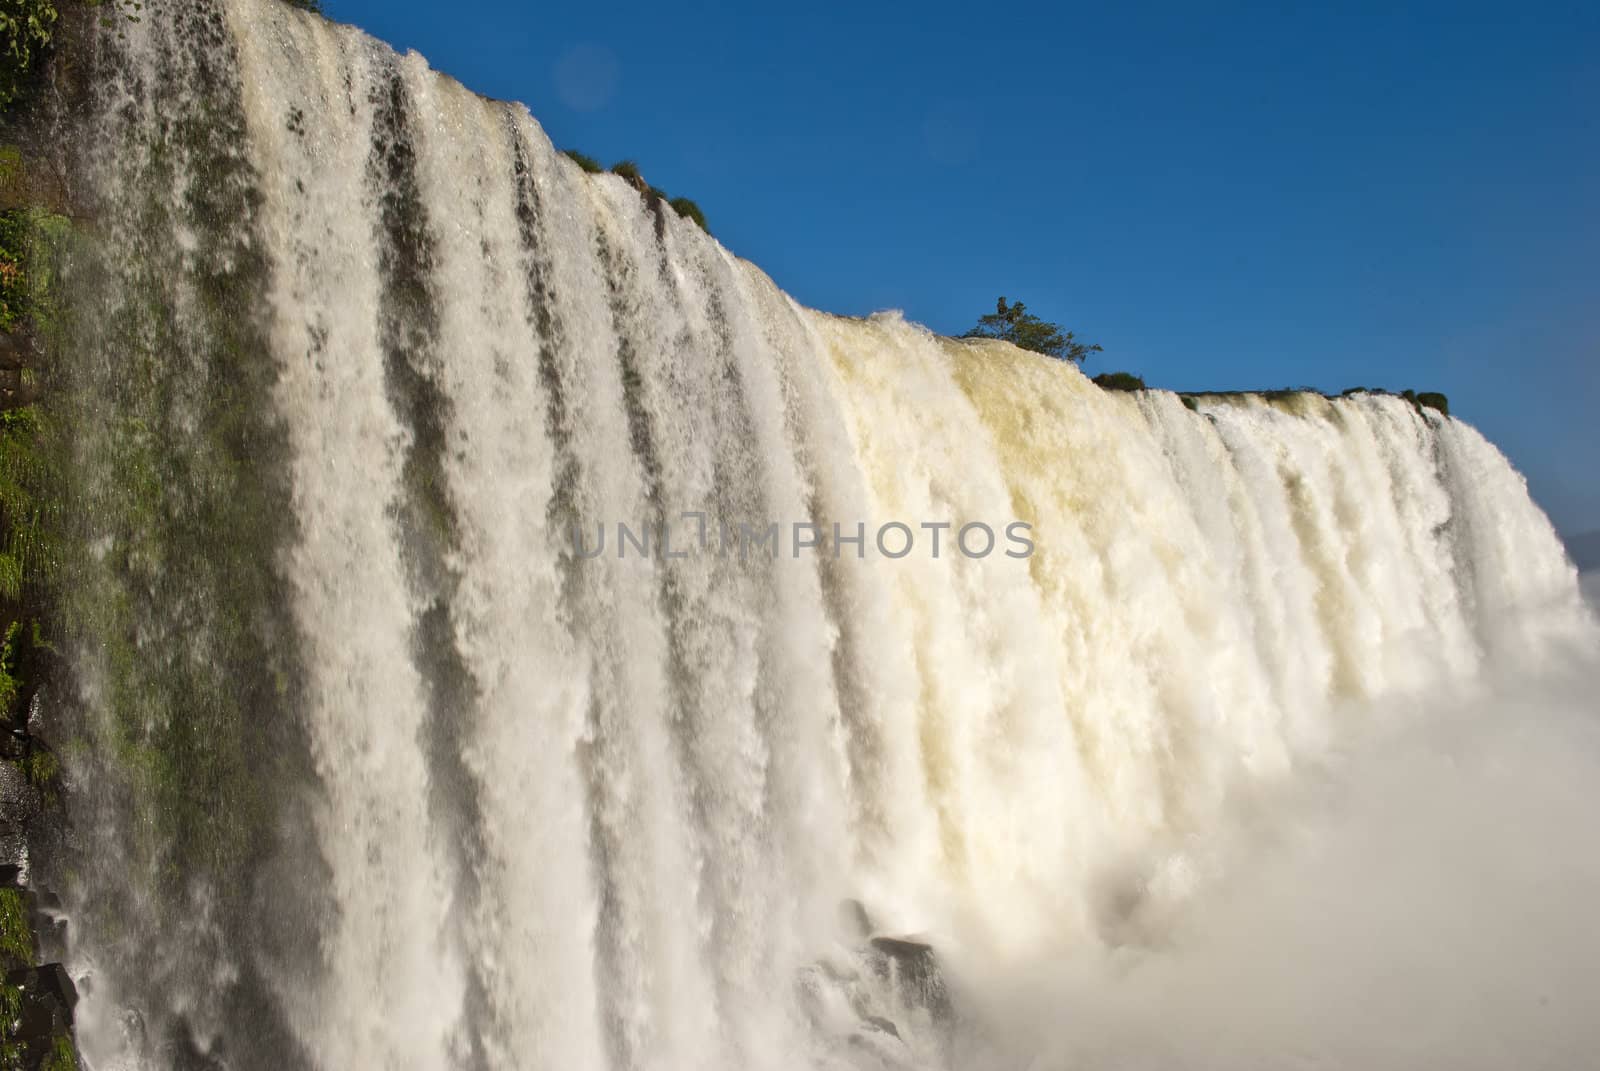 Iguazu falls, Argentina